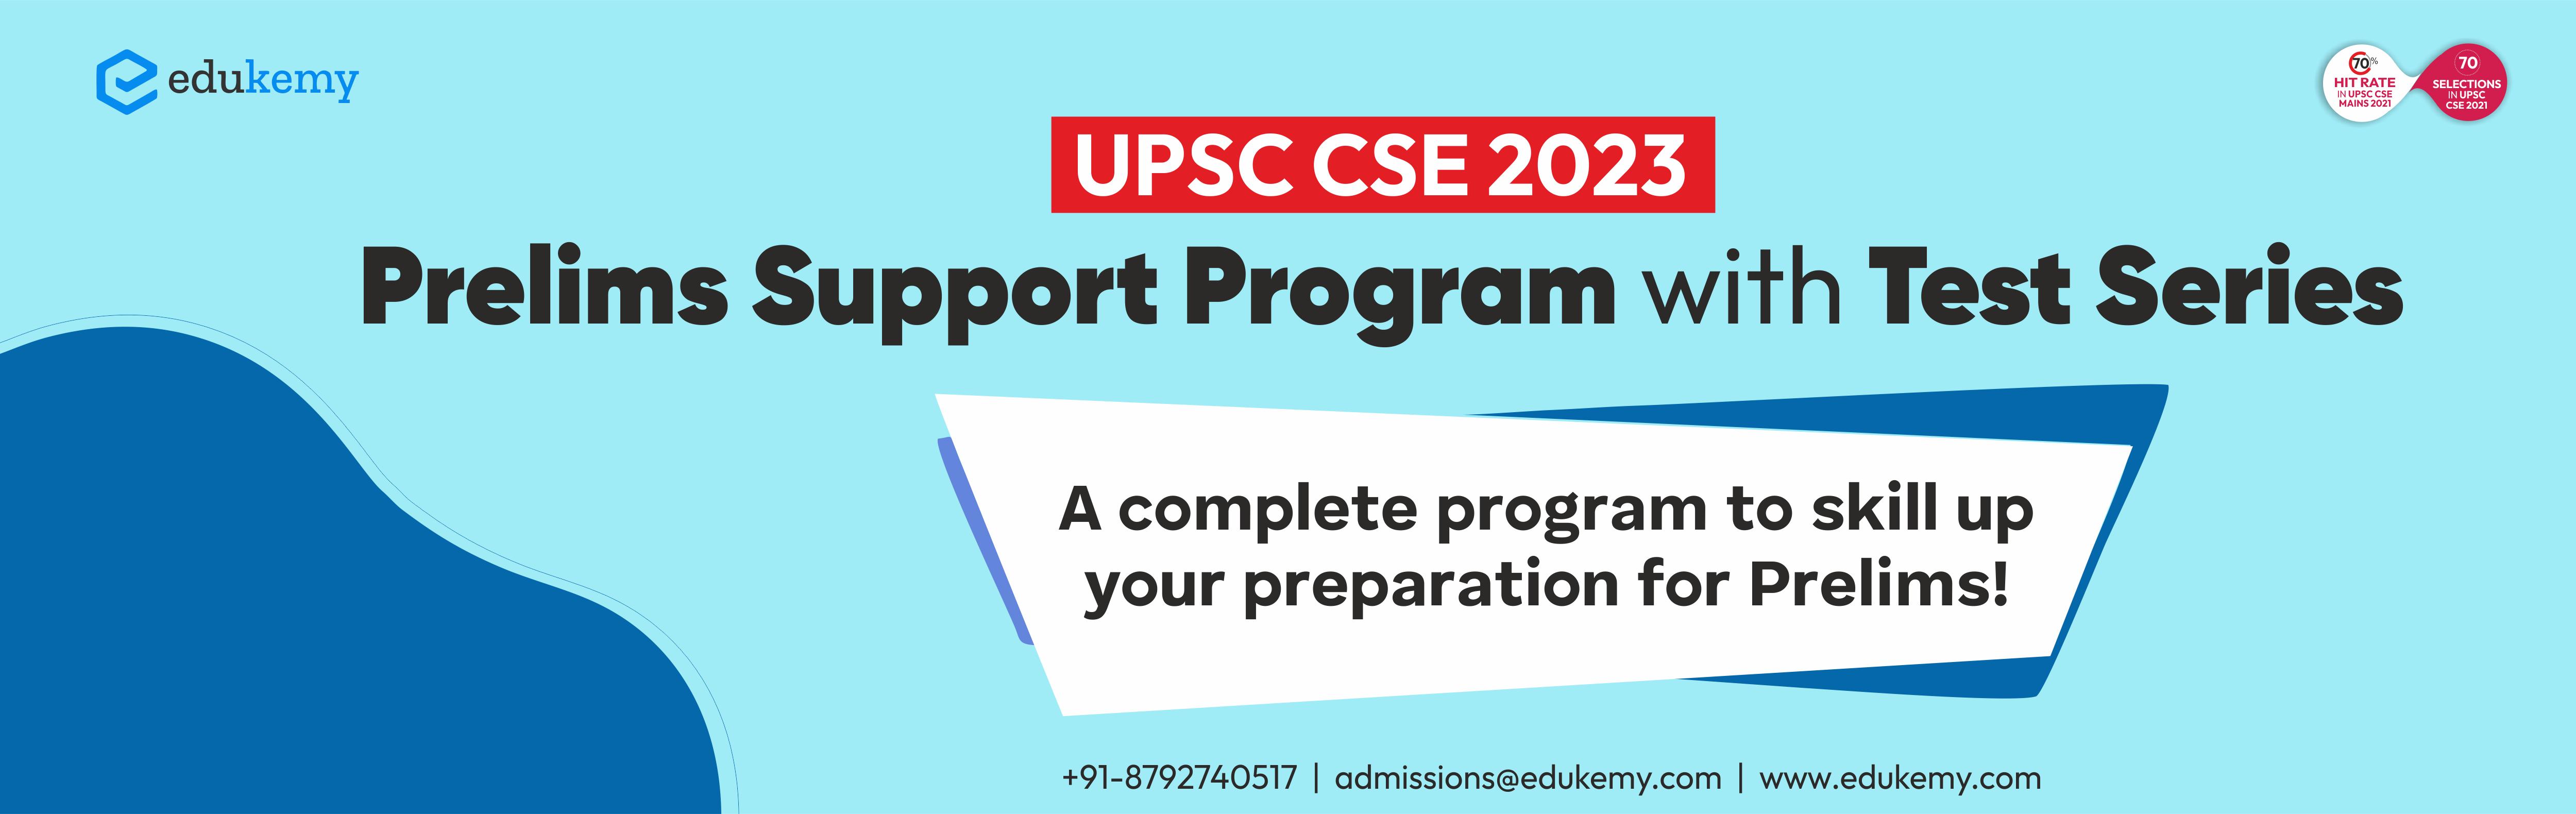 UPSC CSE 2023 Prelims Support Program with Test Series - Edukemy